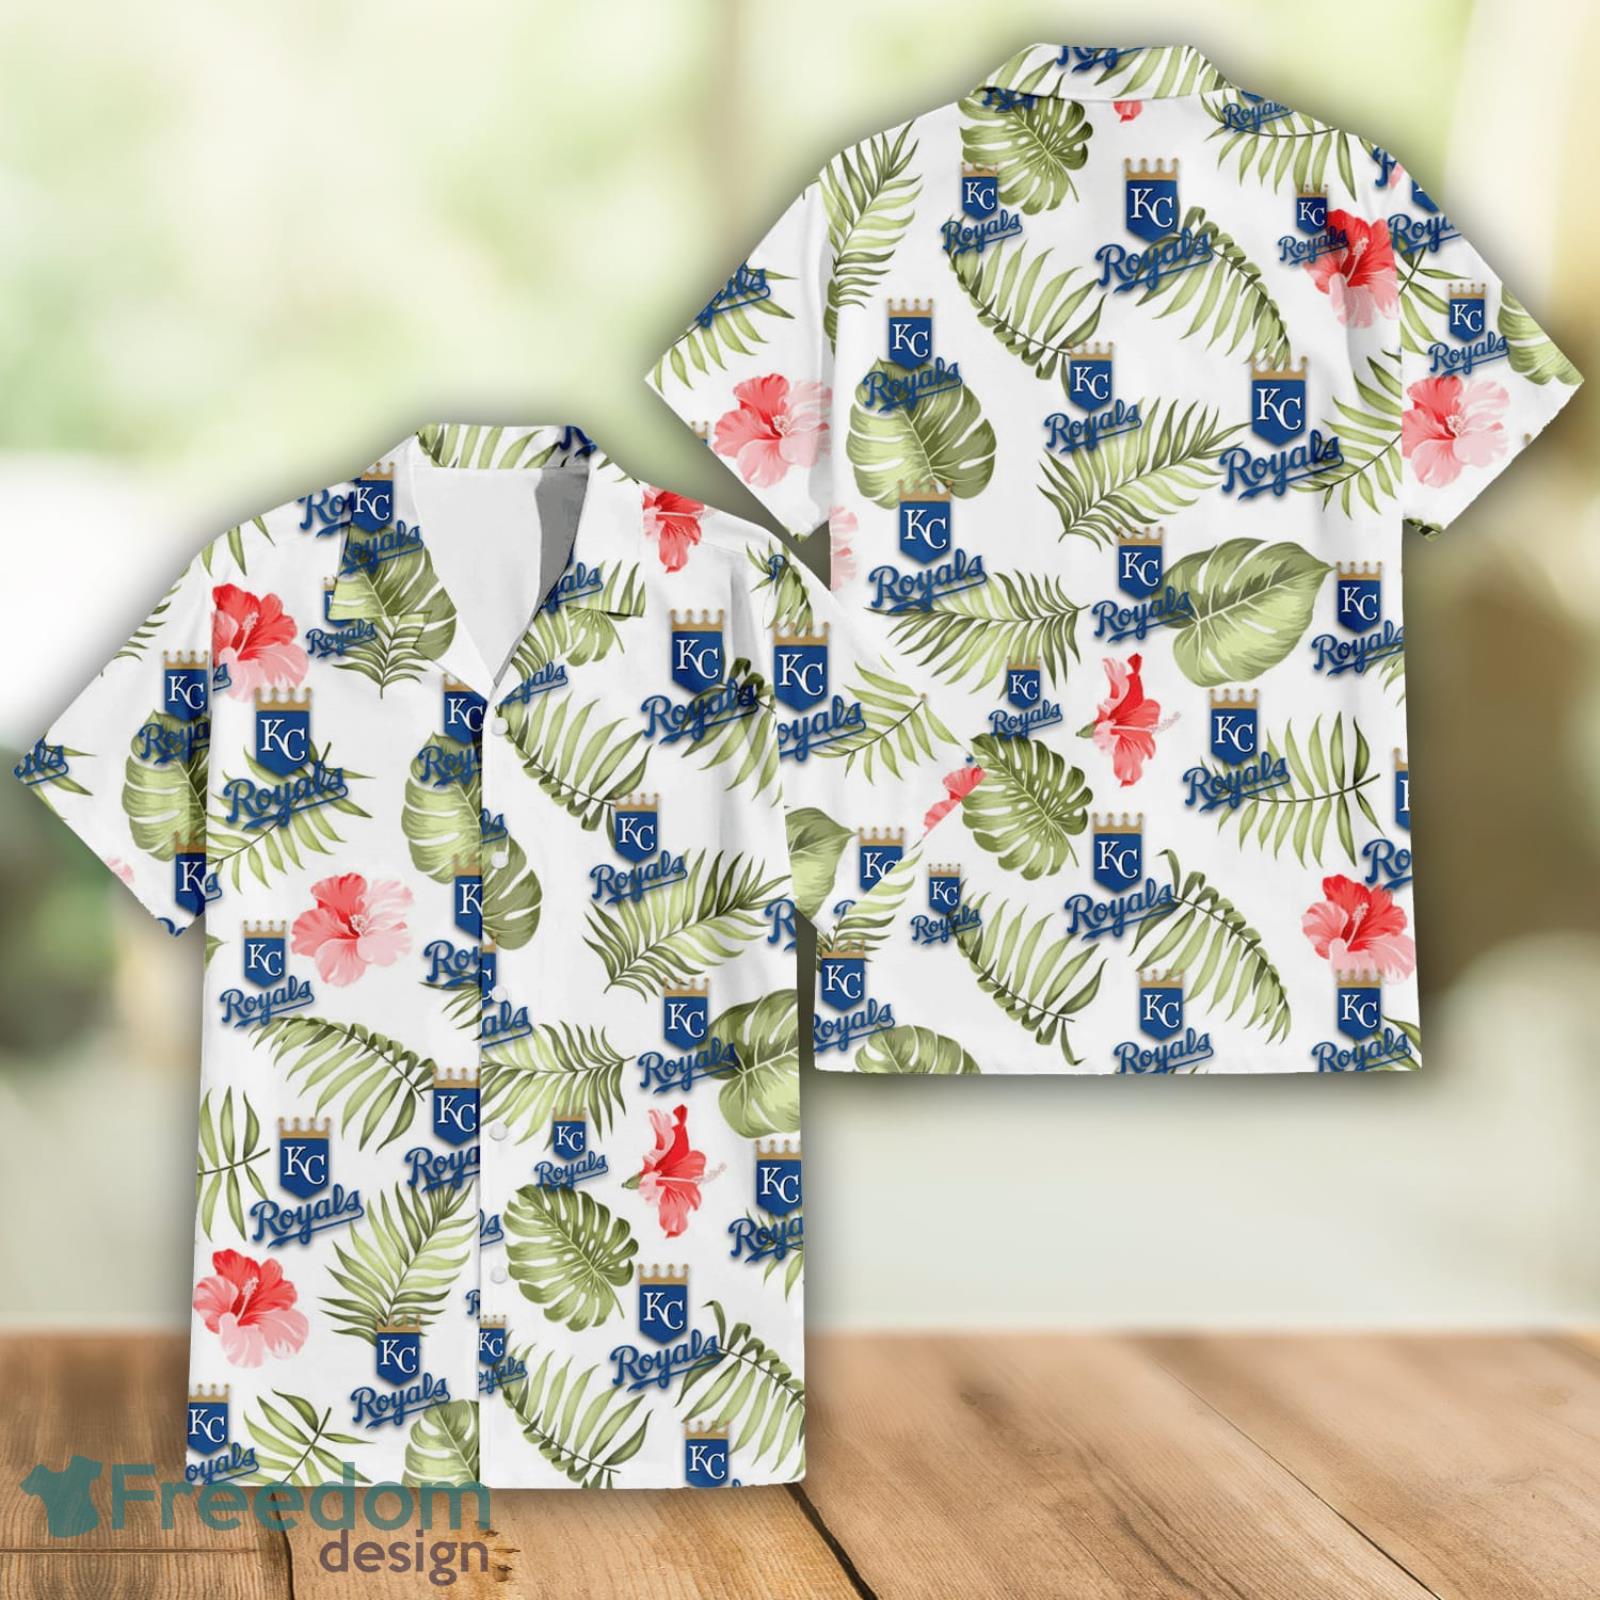 Kansas City Royals Green Leaf Pattern Tropical Hawaiian Shirt For Men And  Women - Freedomdesign